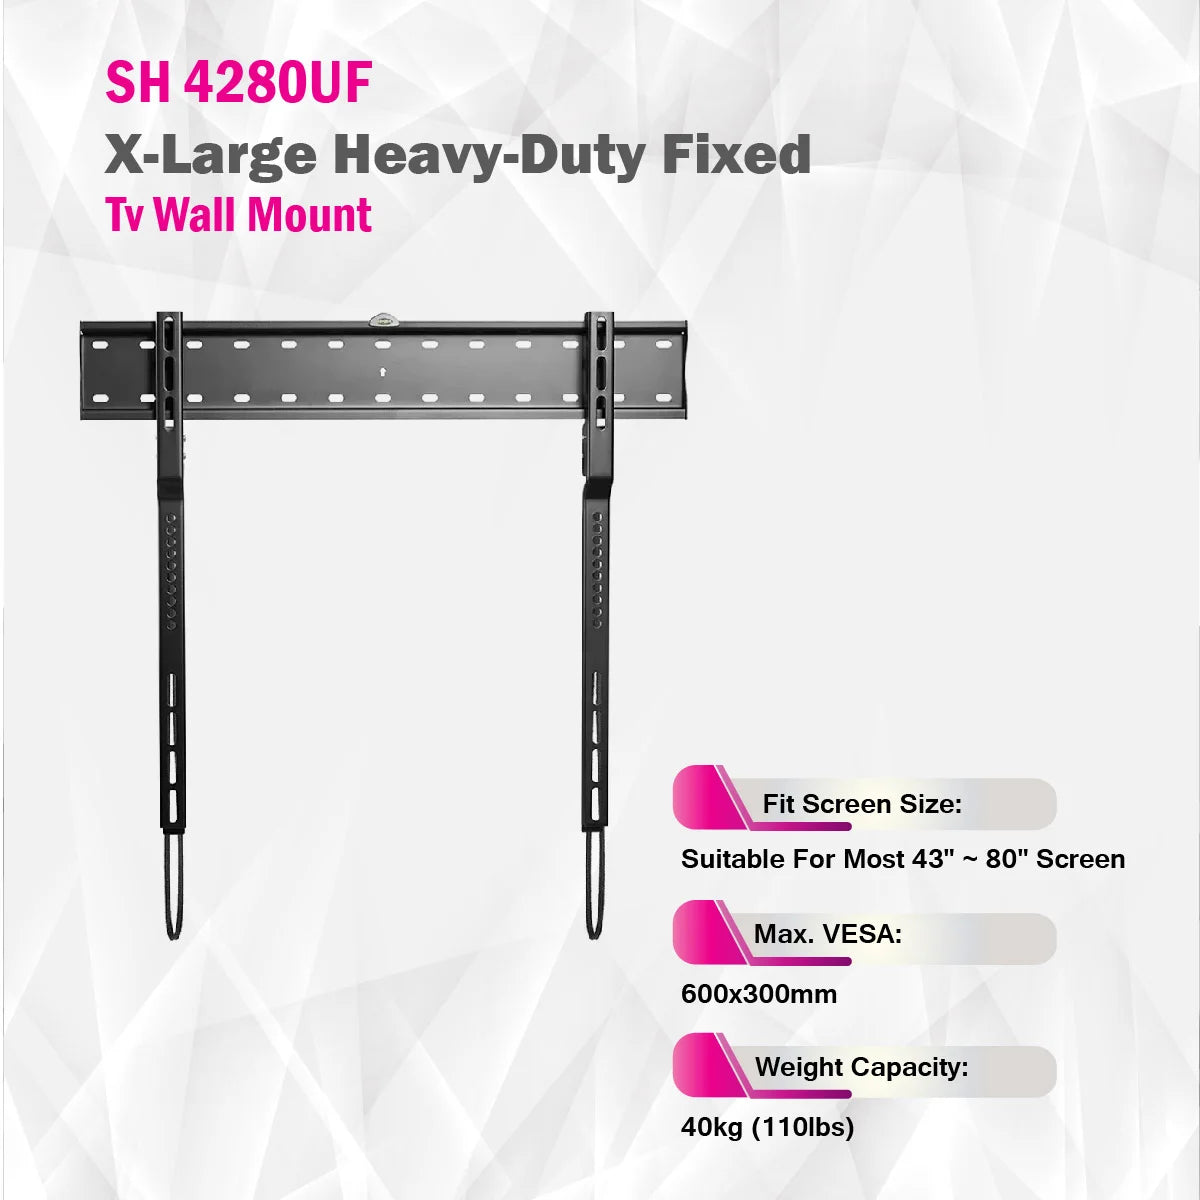 SkillTech -SH 4280UF - Ultra Thin Fixed TV Wall Mount